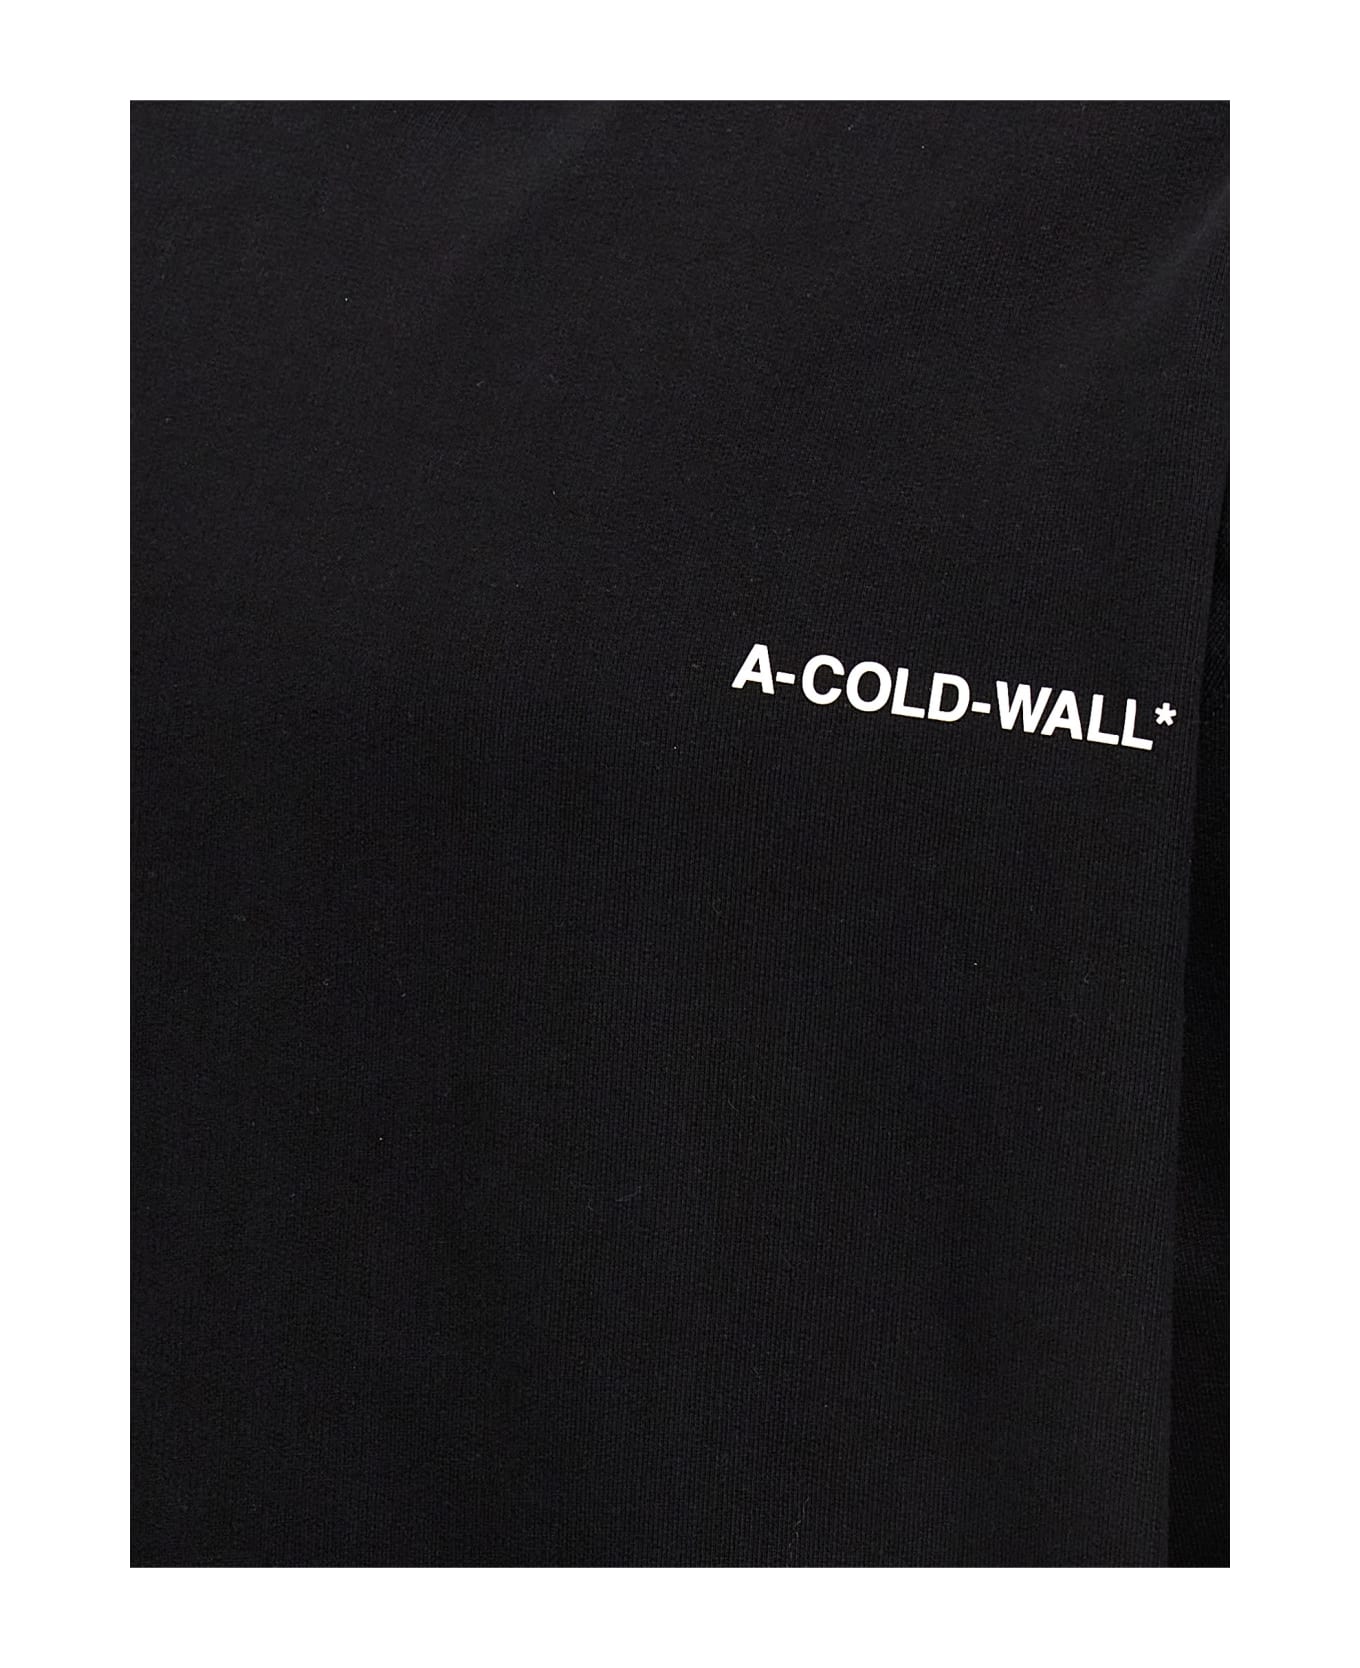 A-COLD-WALL 'essential Small Logo' Hoodie Fleece - BLACK